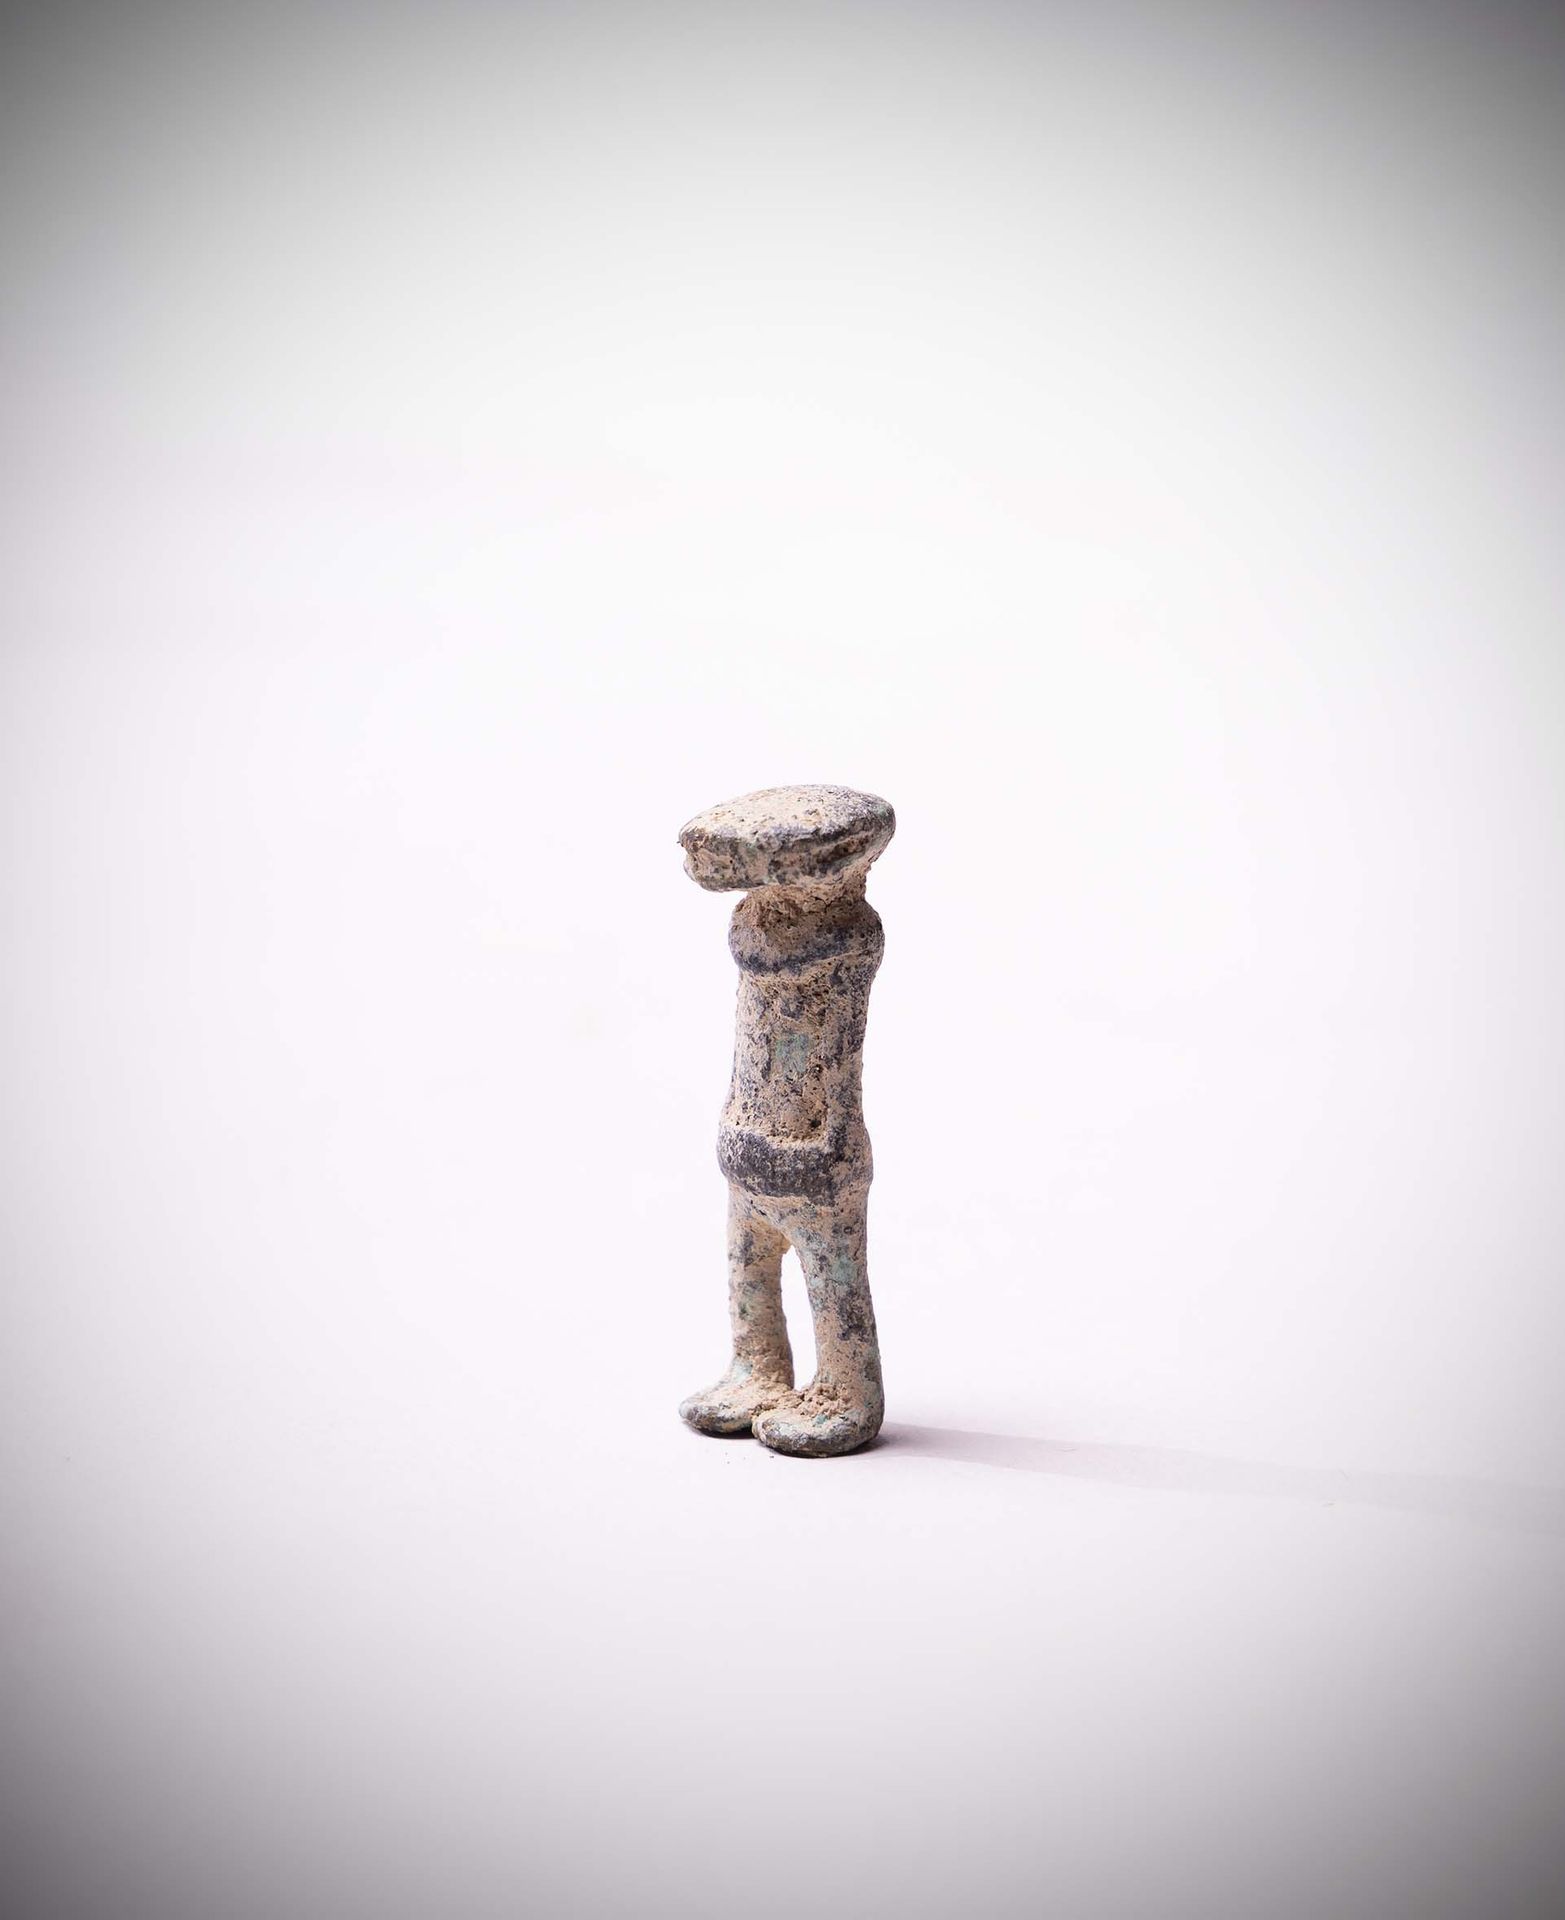 Null 绍尔

(乍得)青铜人像，有氧化和泥土色的铜锈。

在卡内姆建立的这种文化从8世纪持续到15世纪。

莫兰-内隆博士收藏品 高：4厘米